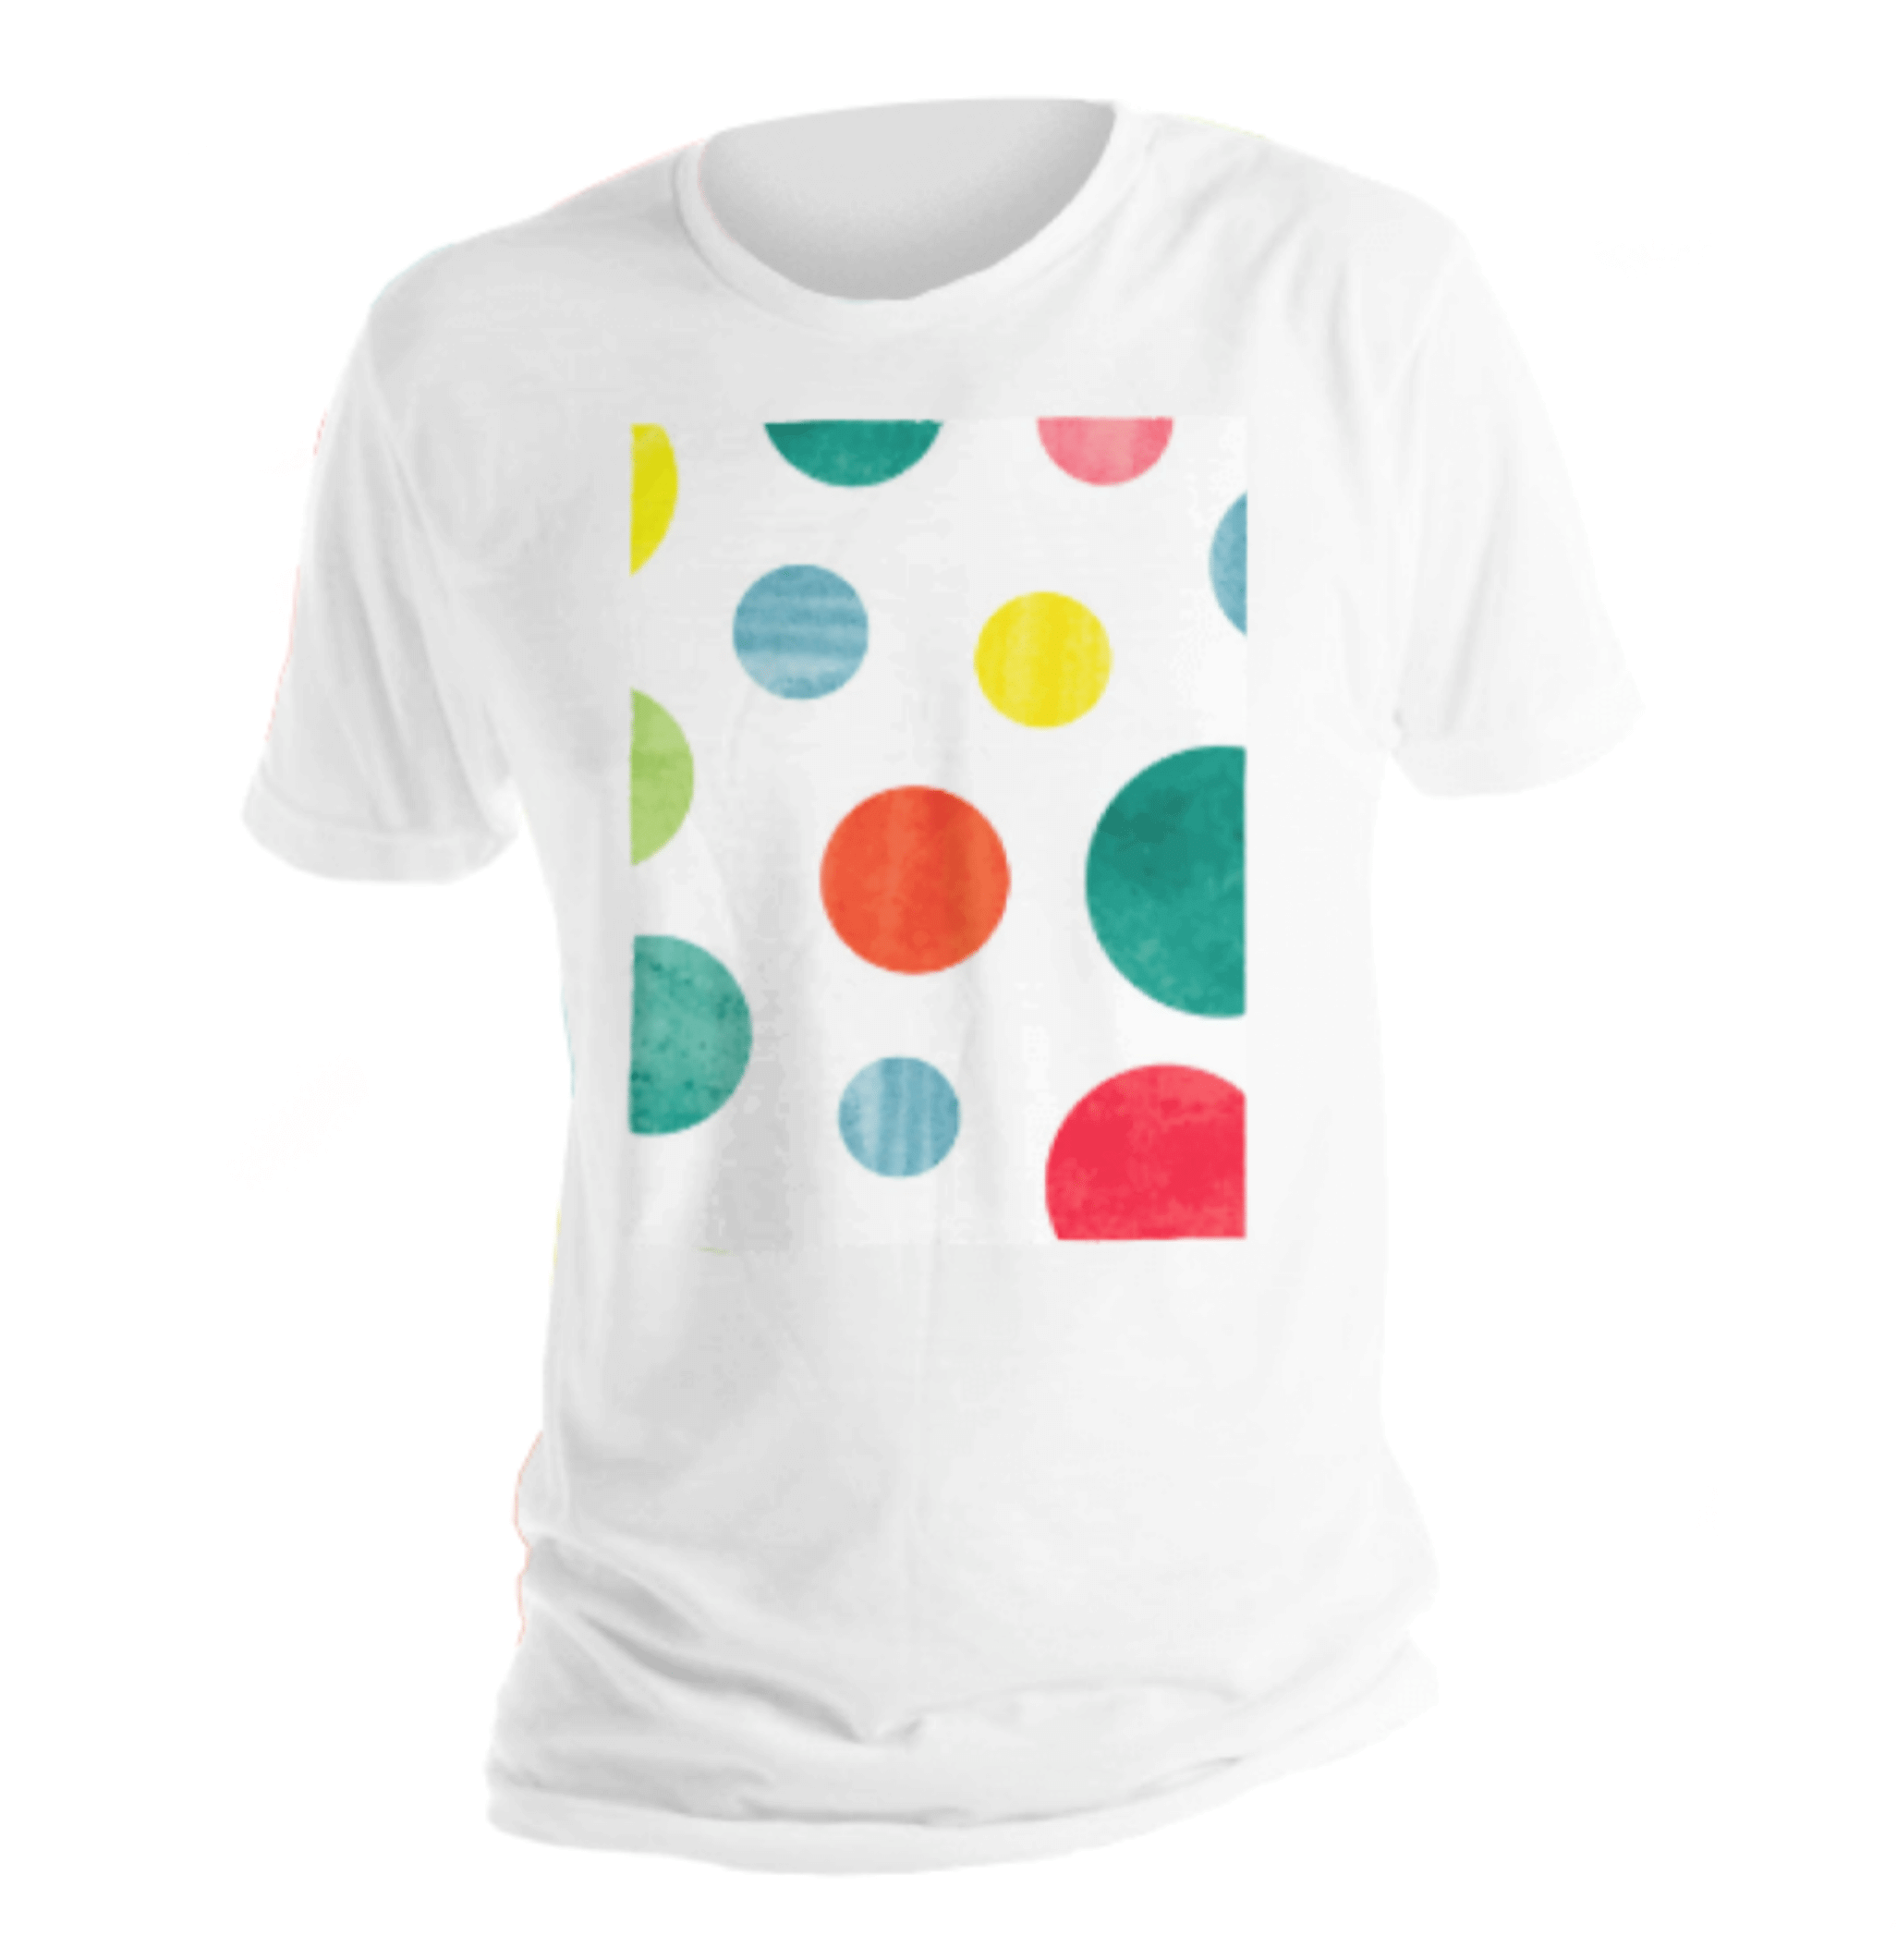 Custom Men's/Unisex T-Shirt | Send us Your Design! ThatMNLife T-Shirt Minnesota Custom T-Shirts and Gifts